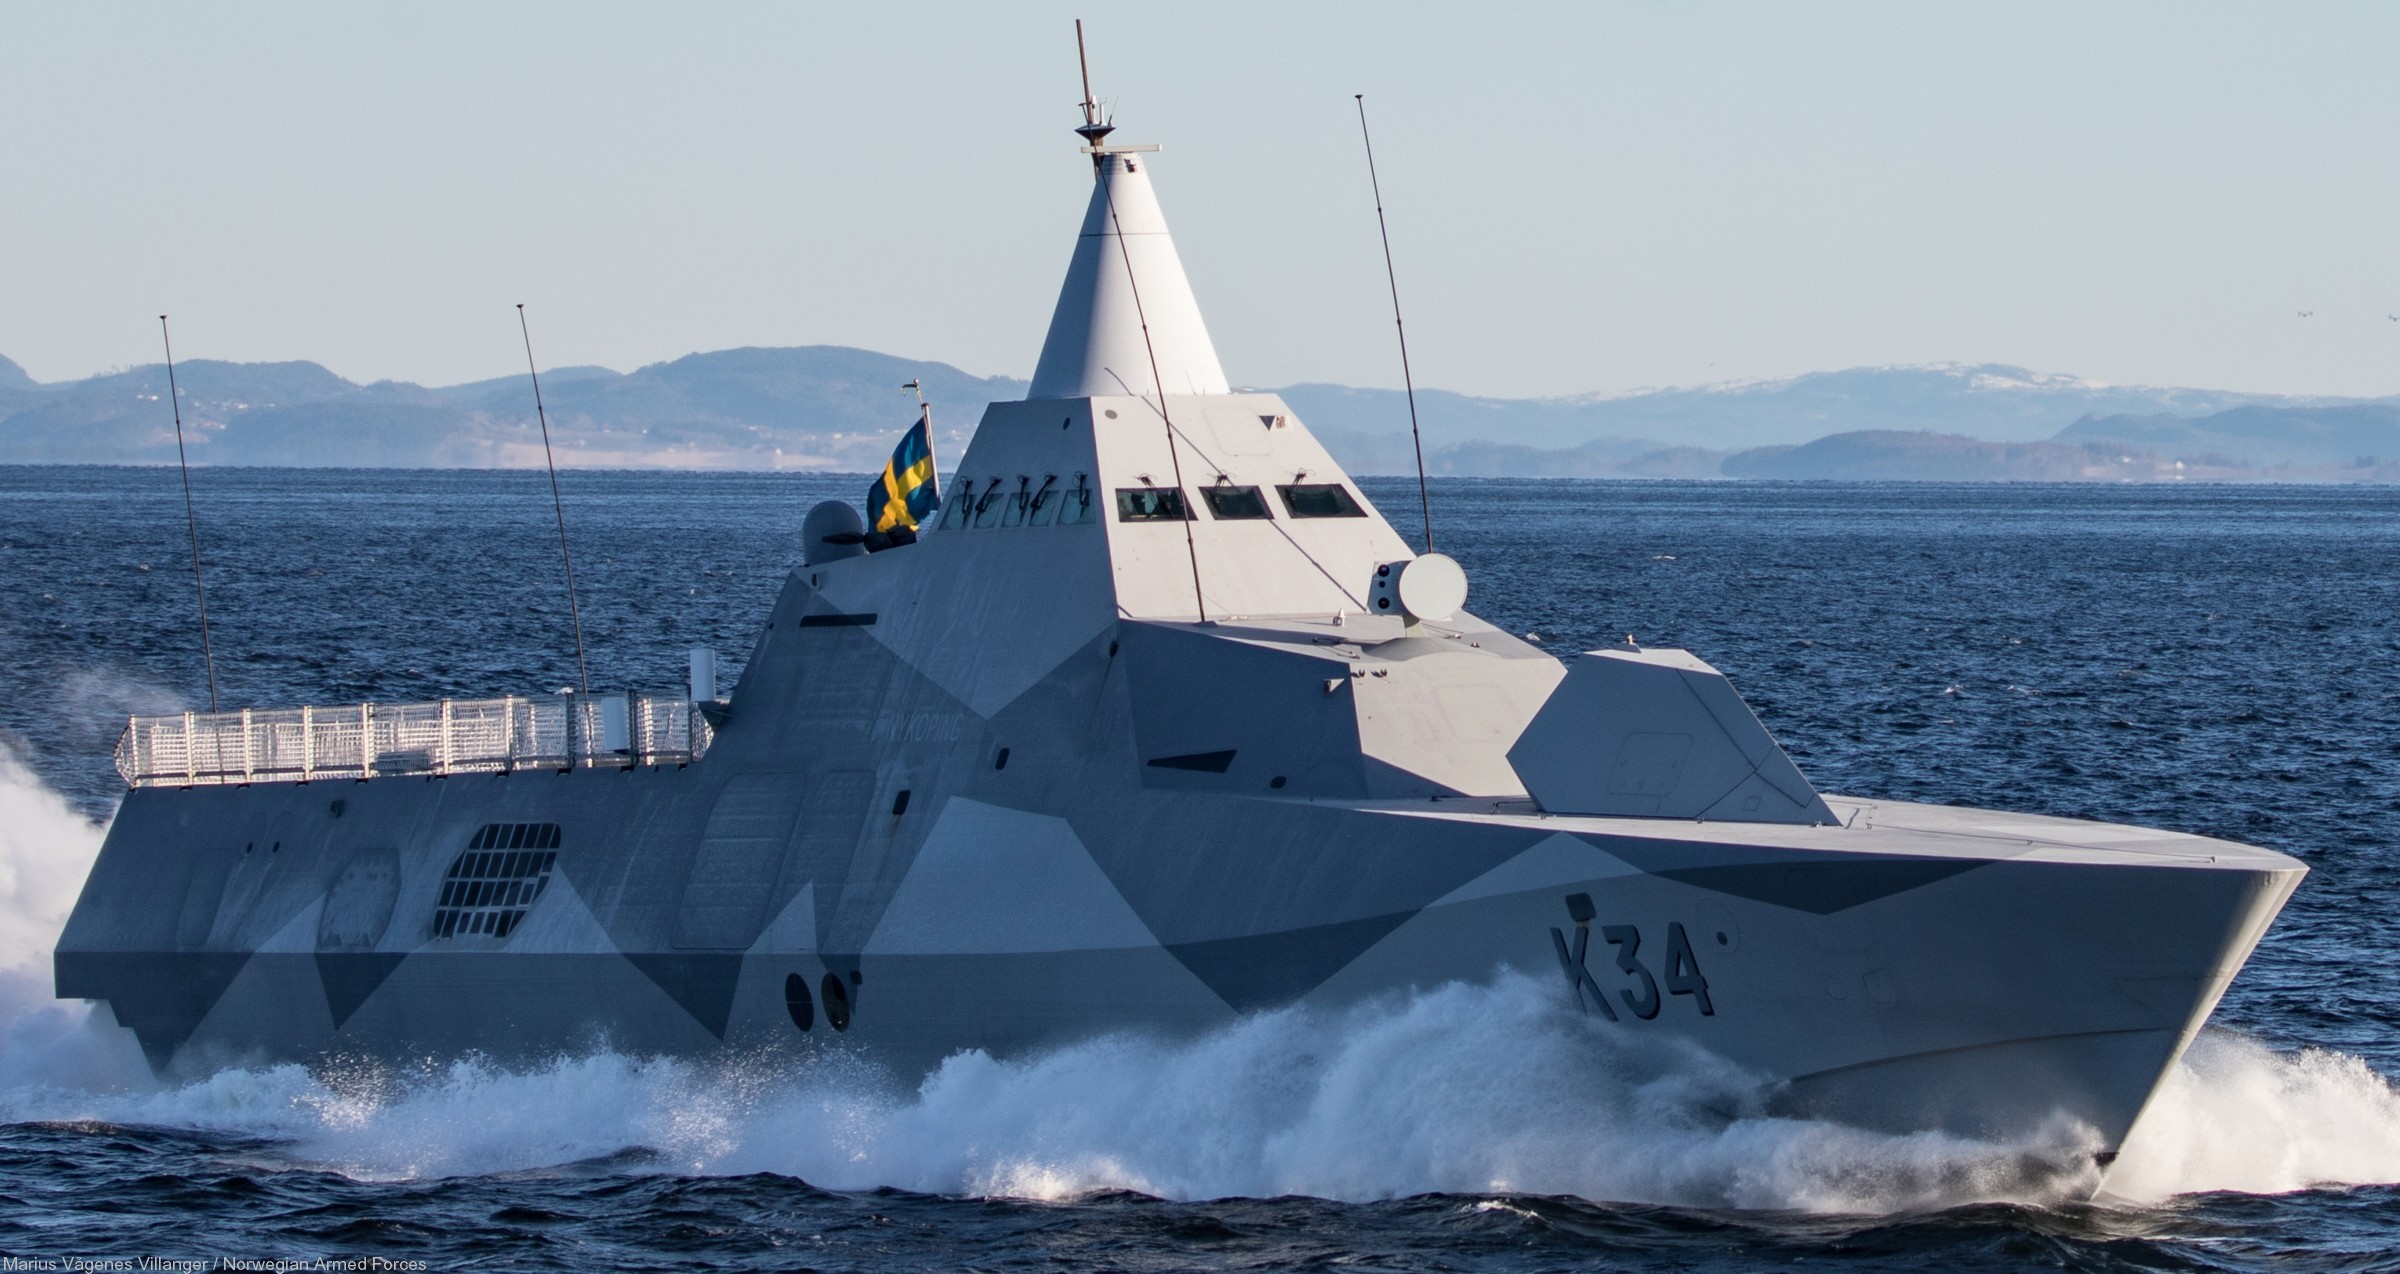 k34 hswms hms nykoping visby class corvette royal swedish navy svenska marinen 02